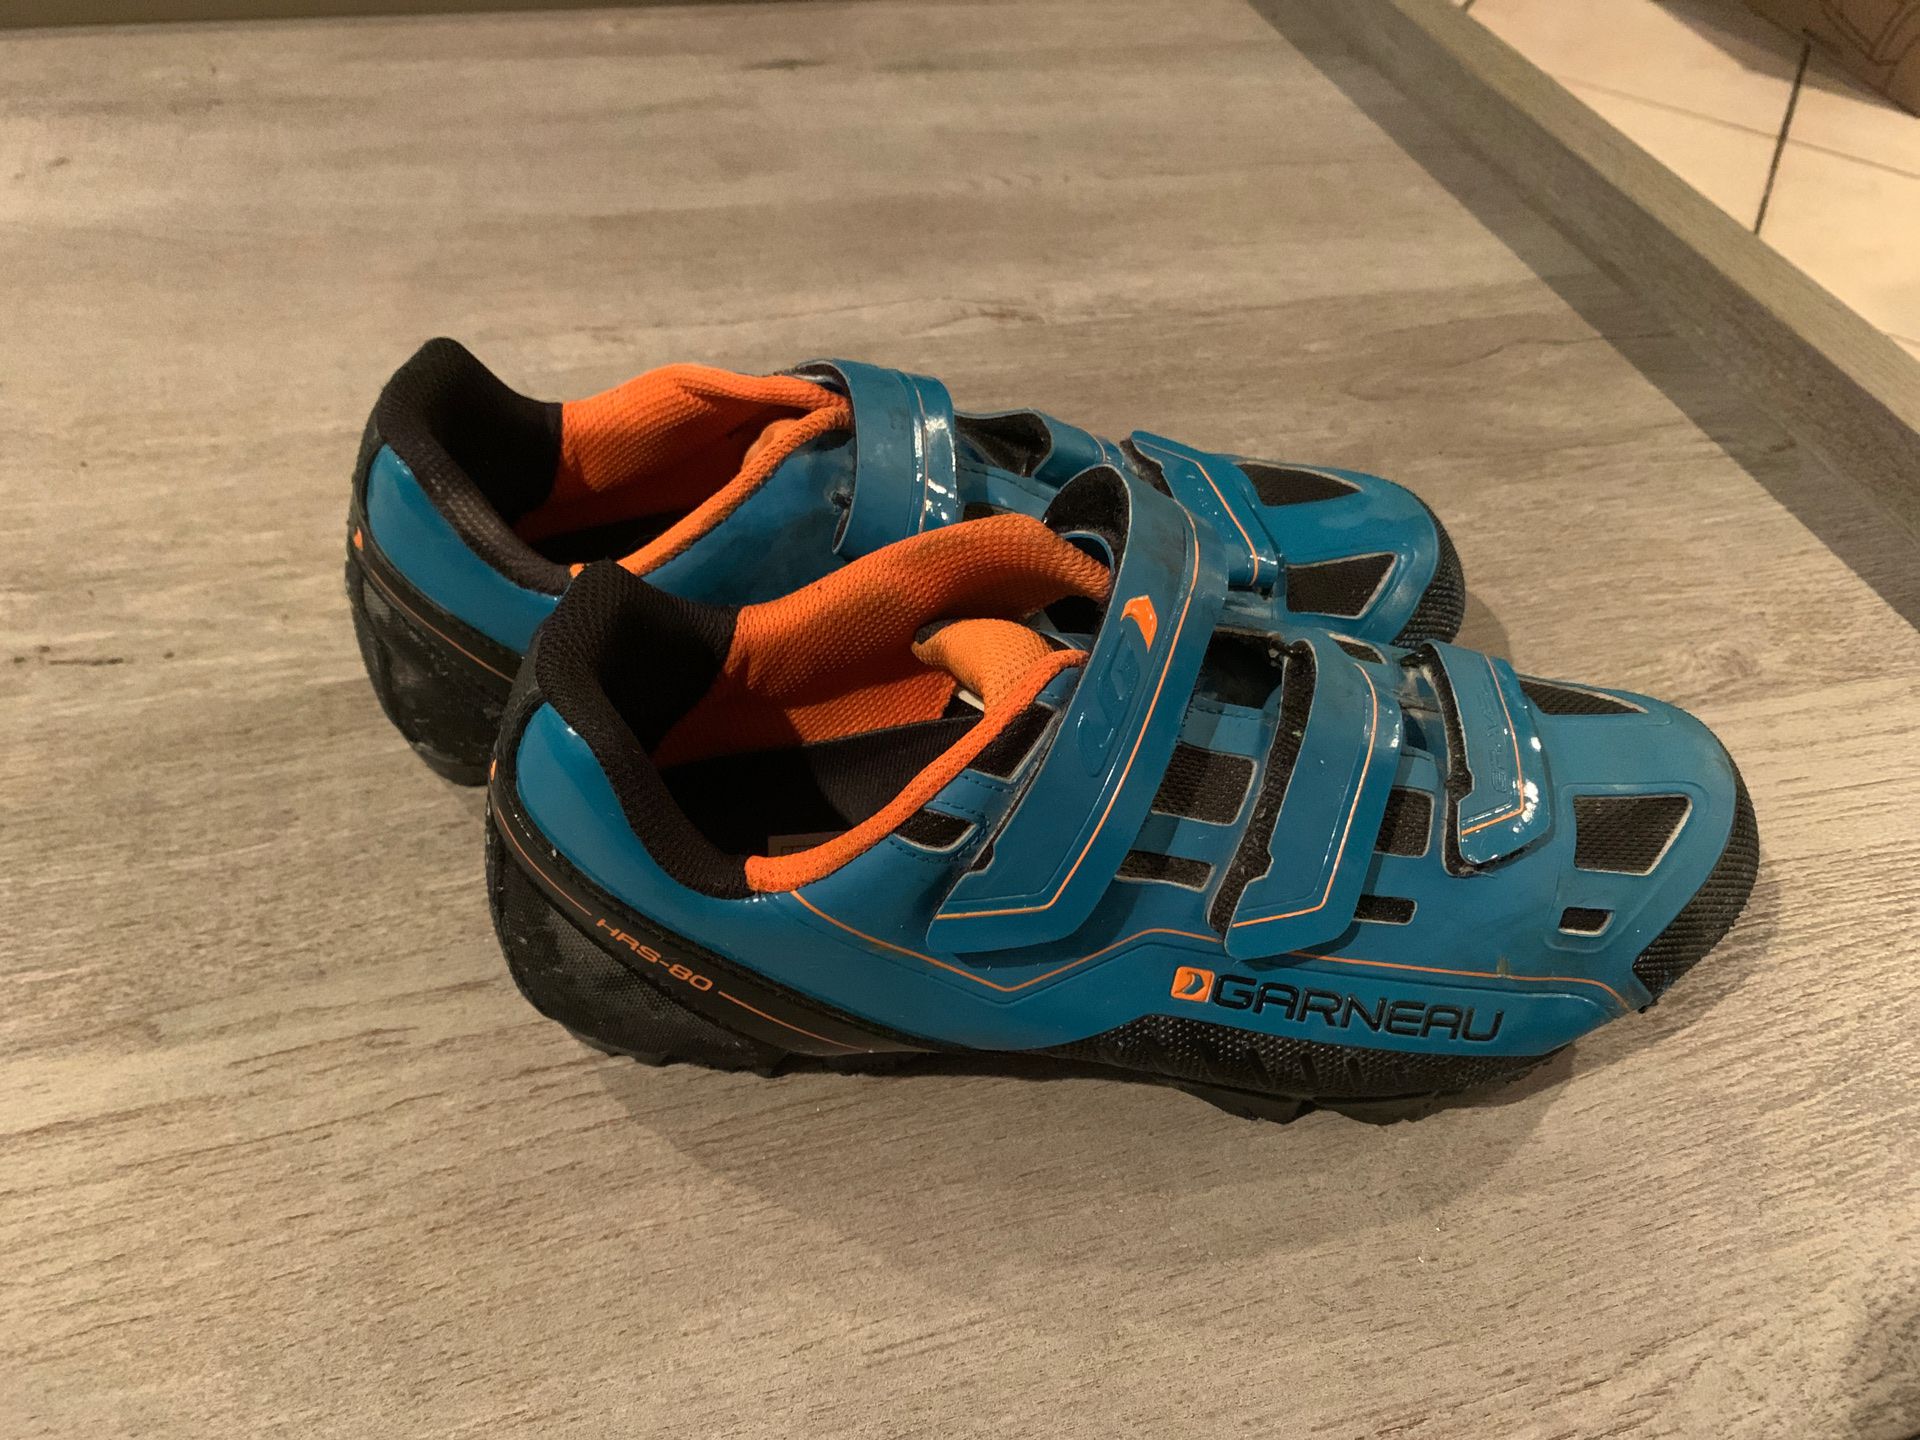 Mountain bike shoes with clips - Garneau